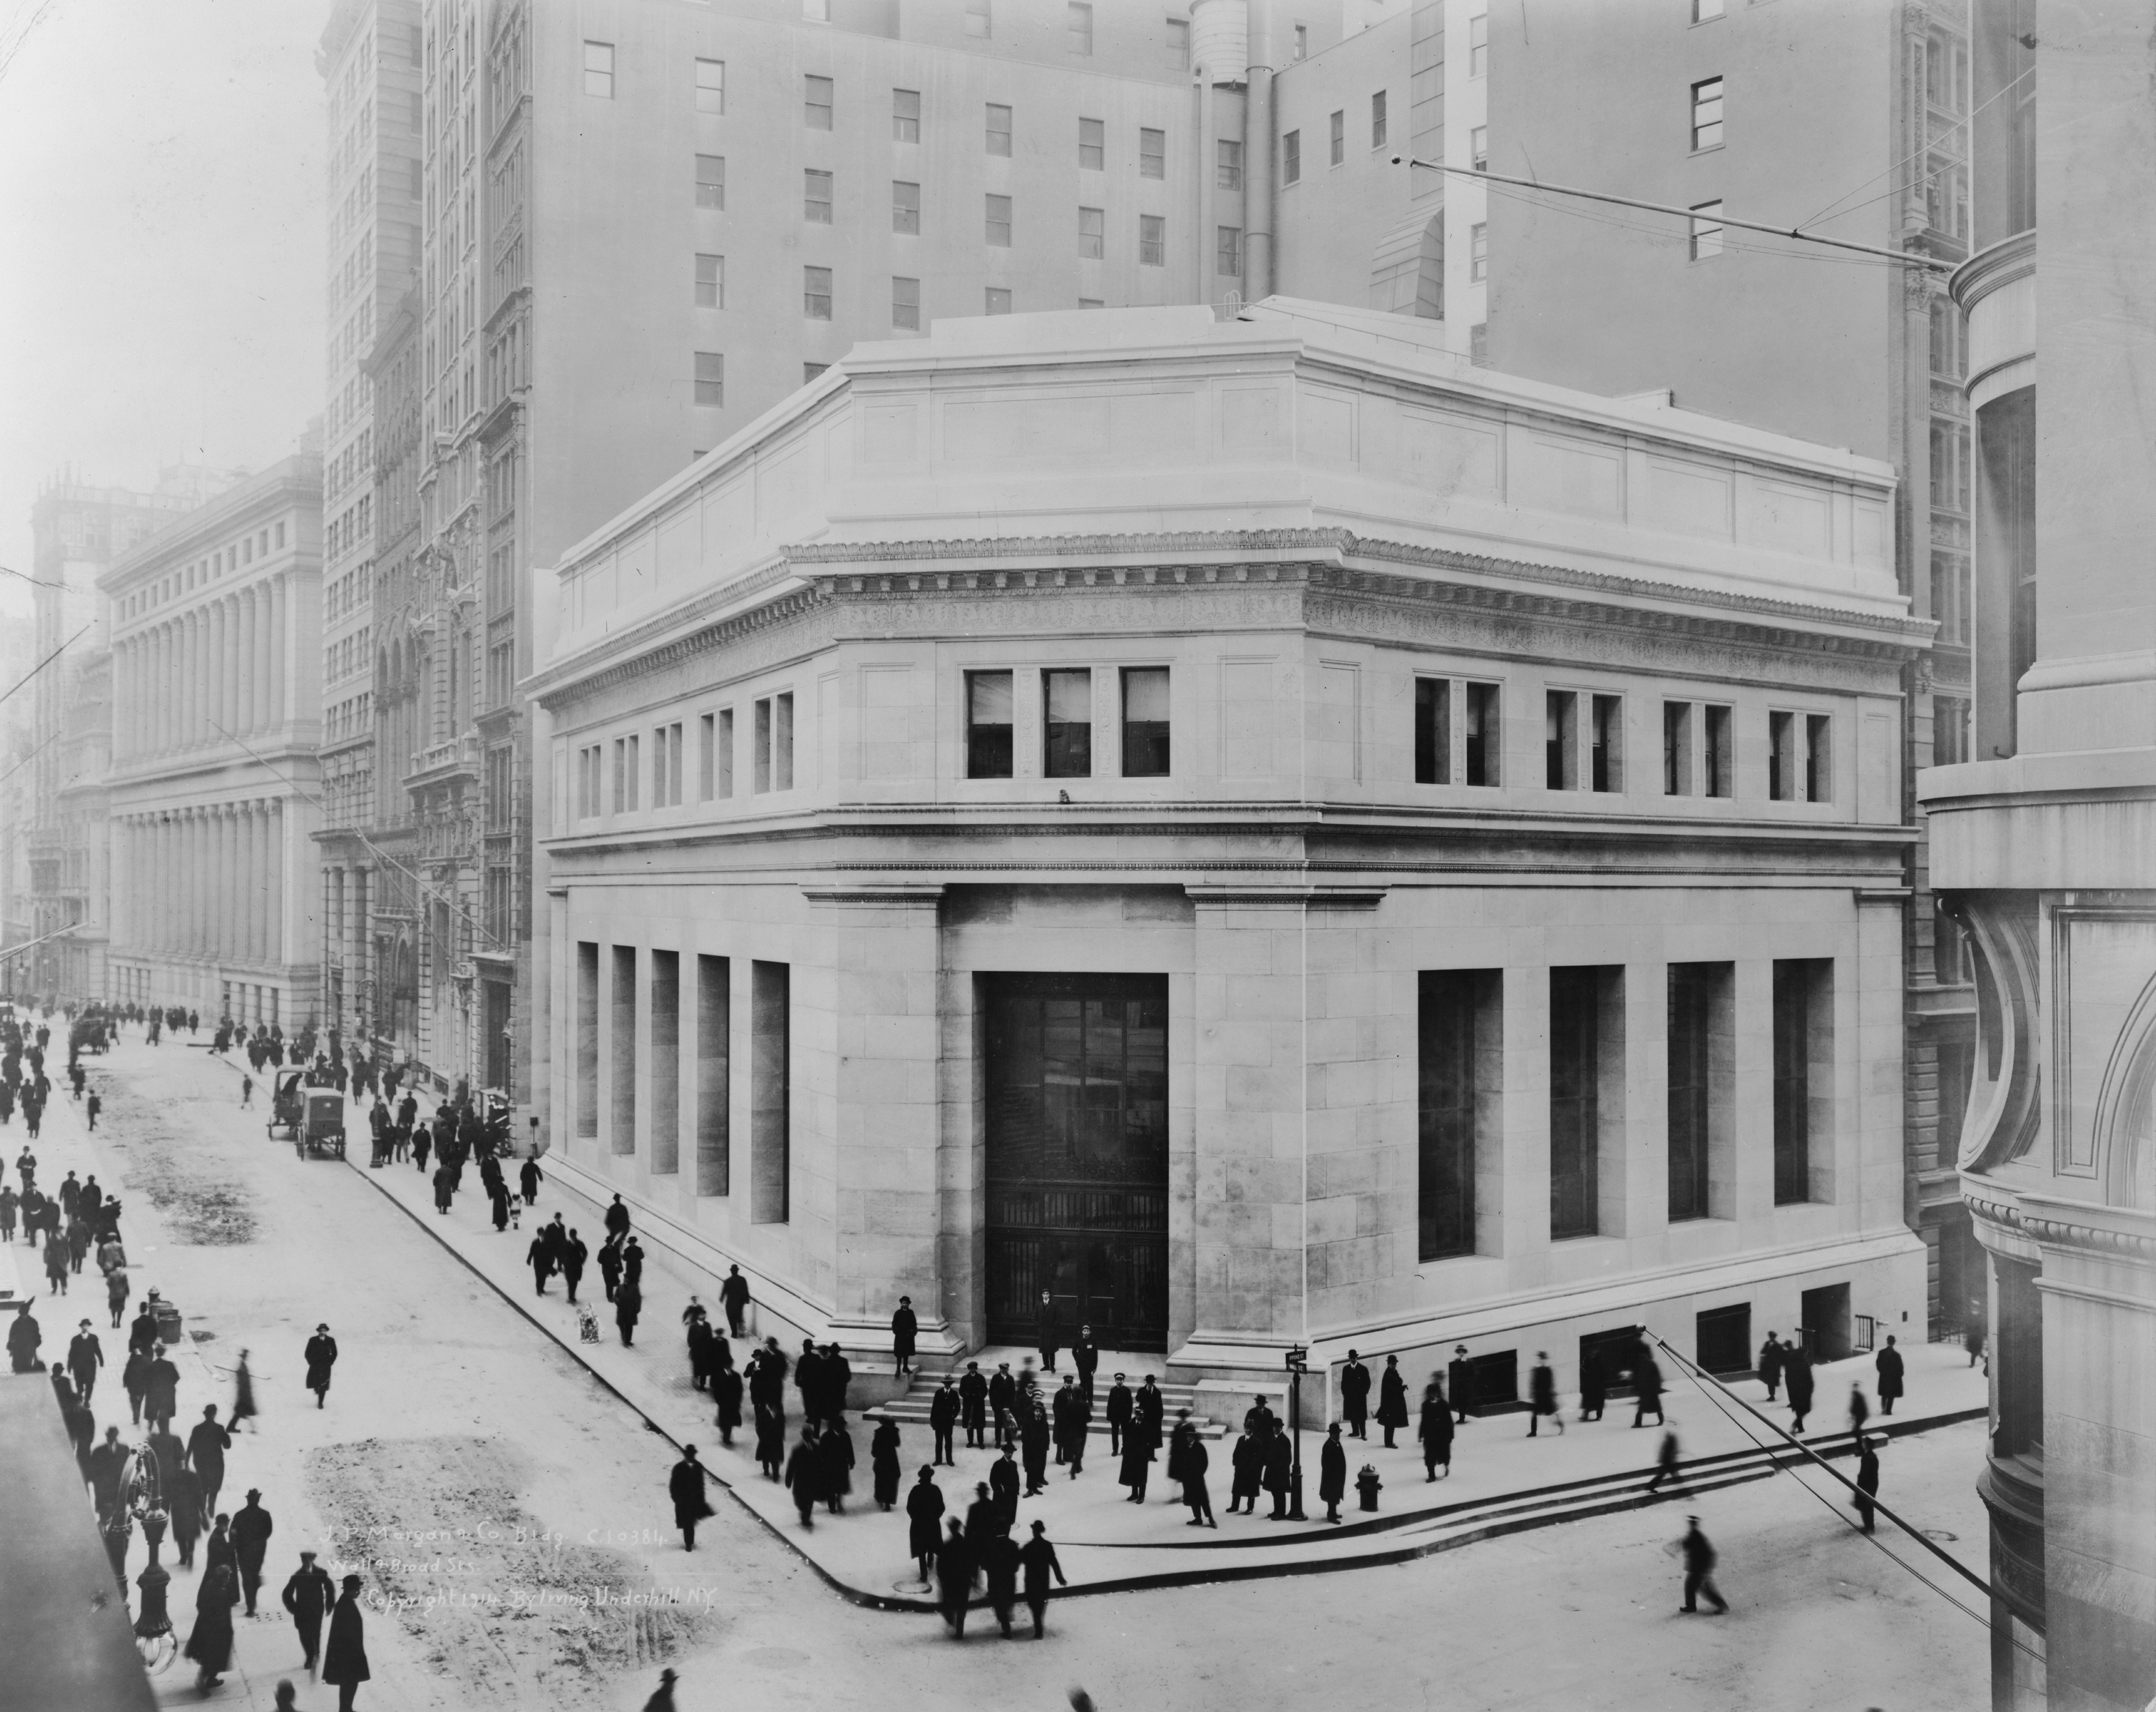 JP Morgan & Co Building, NYC, circa 1914.  Image by Irving Underhill